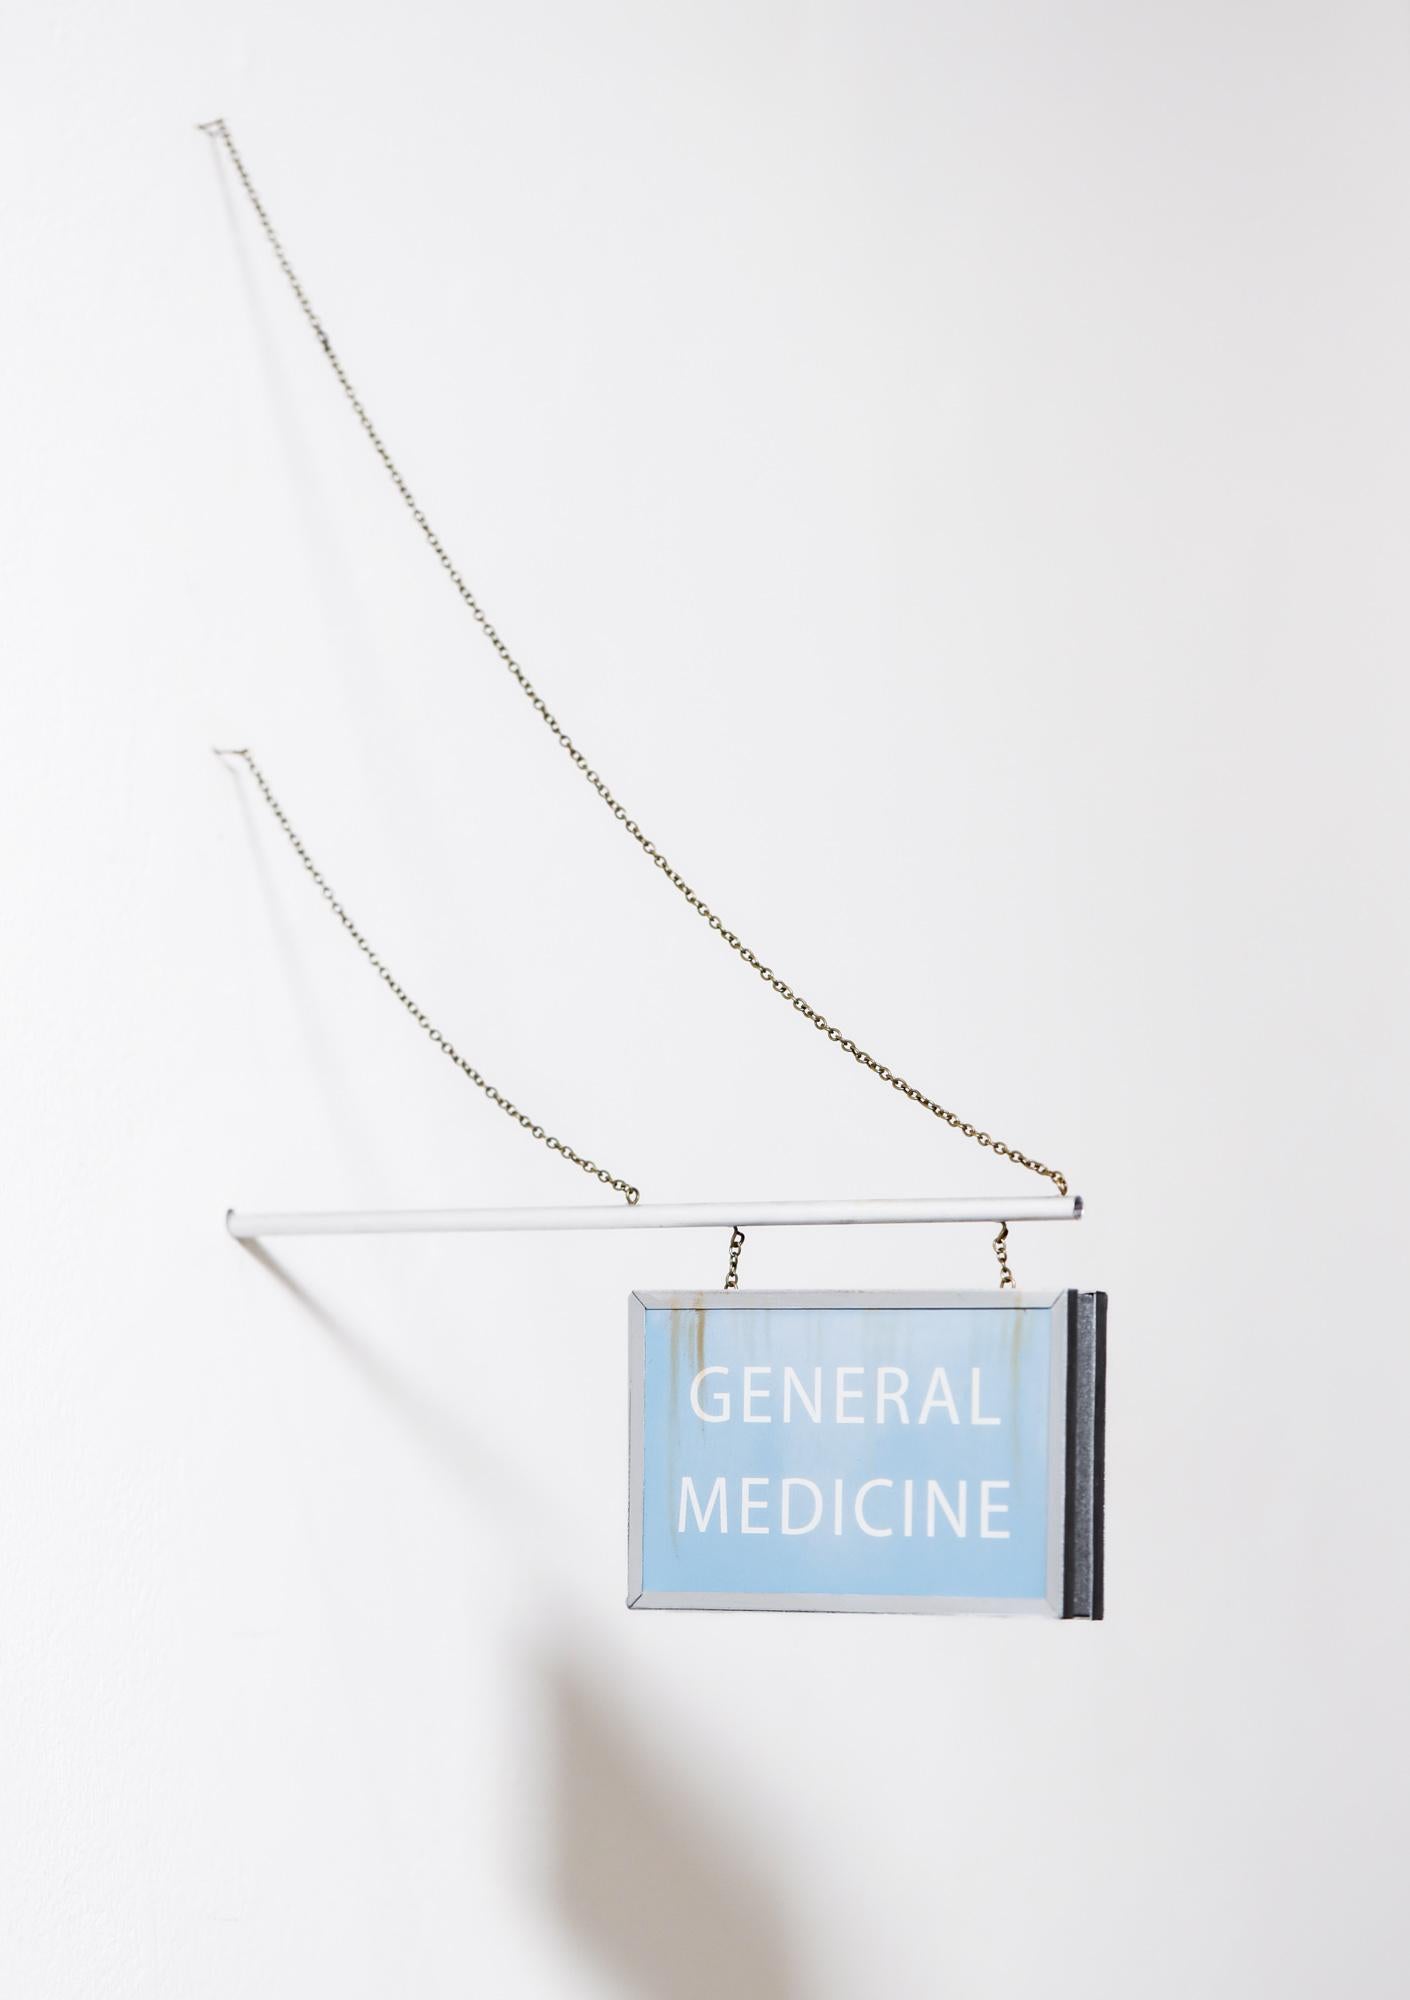 General Medicine - Sculpture by Drew Leshko